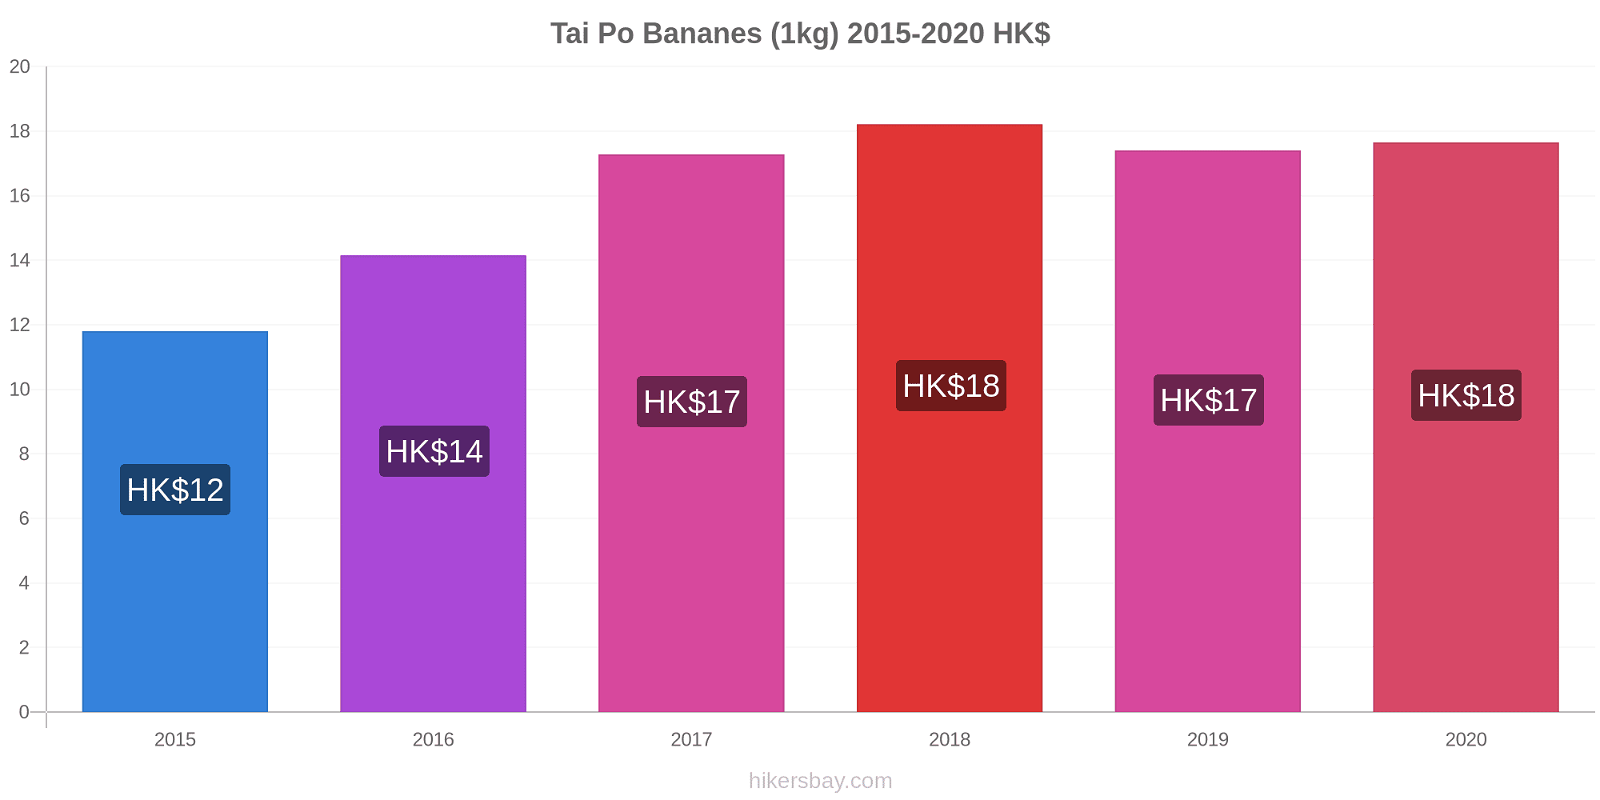 Tai Po changements de prix Bananes (1kg) hikersbay.com